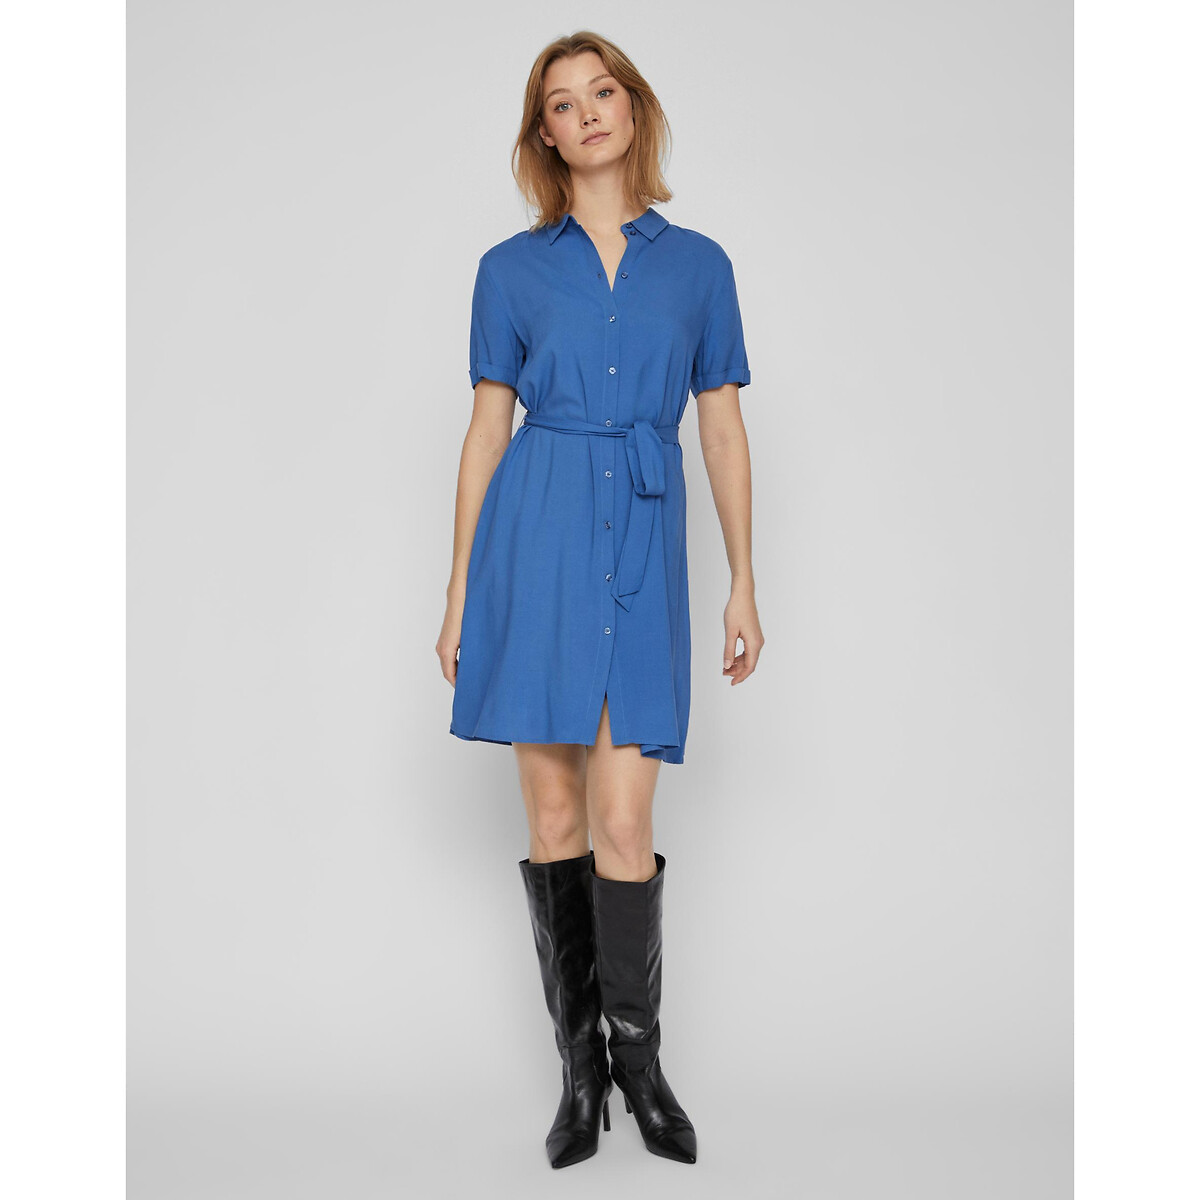 Платье-рубашка Короткие рукава с завязками 46 синий LaRedoute, размер 46 - фото 1